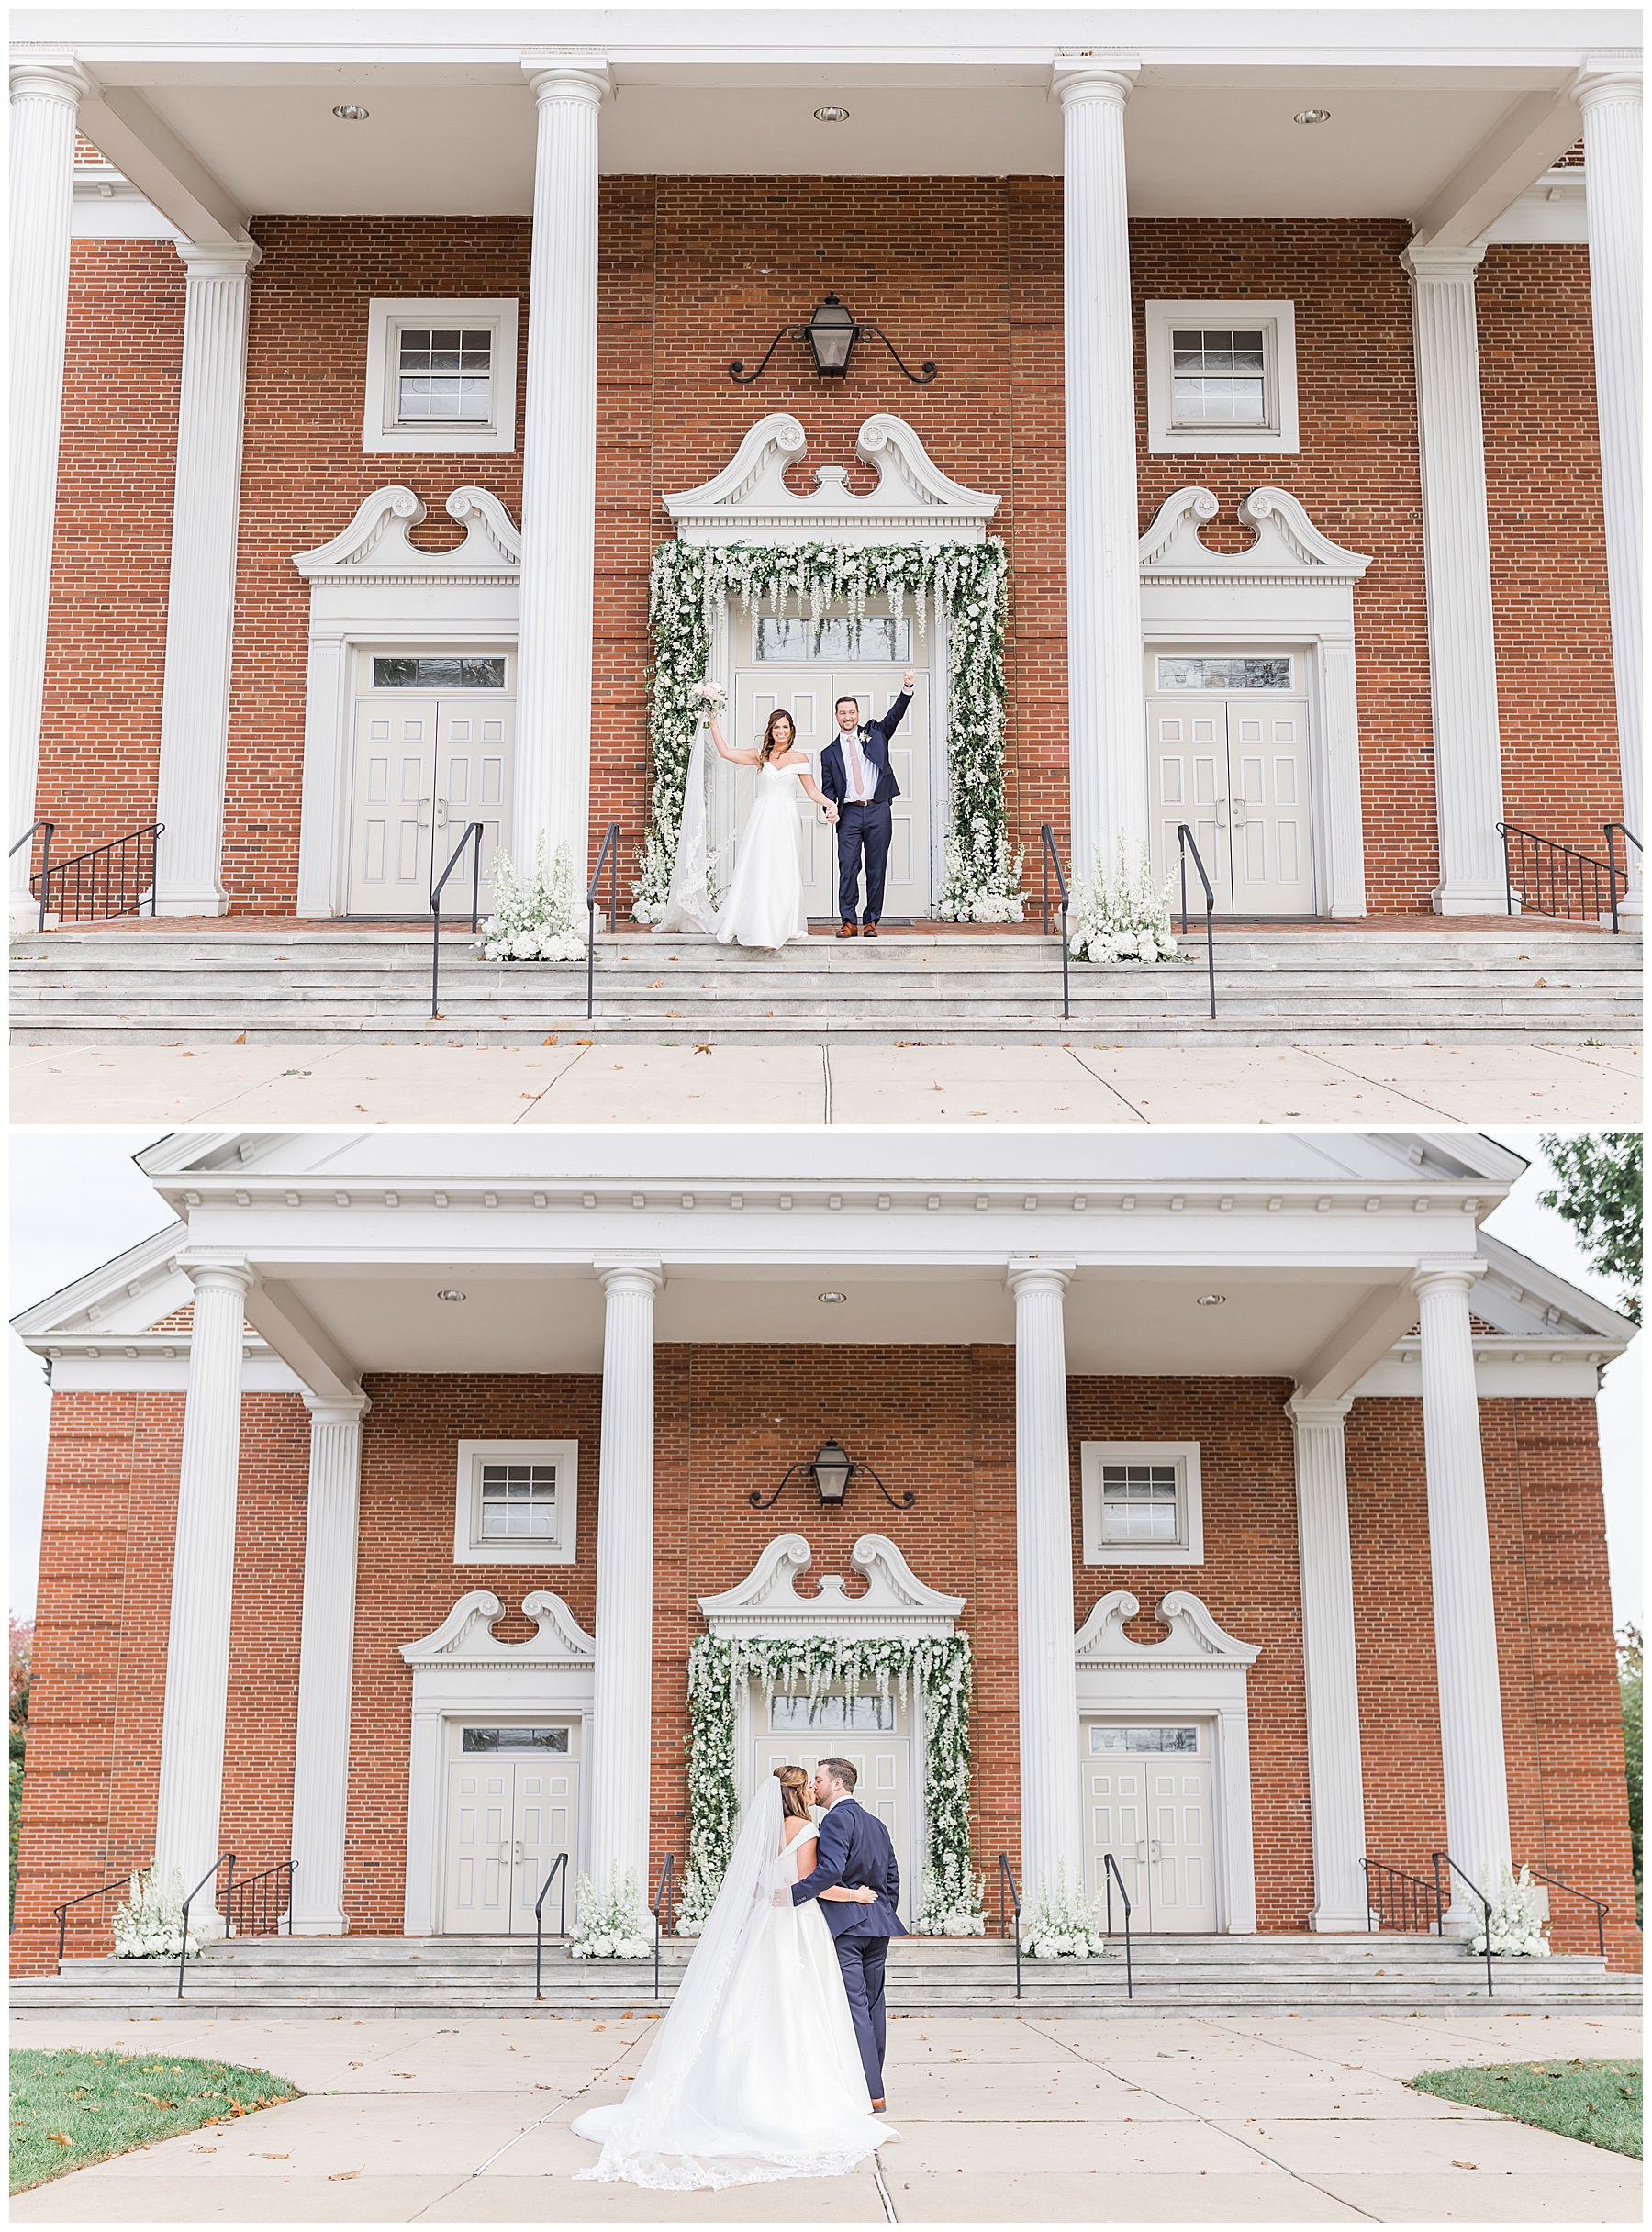 Radnor Valley Country Club Wedding in Villanova, PA by Philadelphia photographer Always Avery Photography